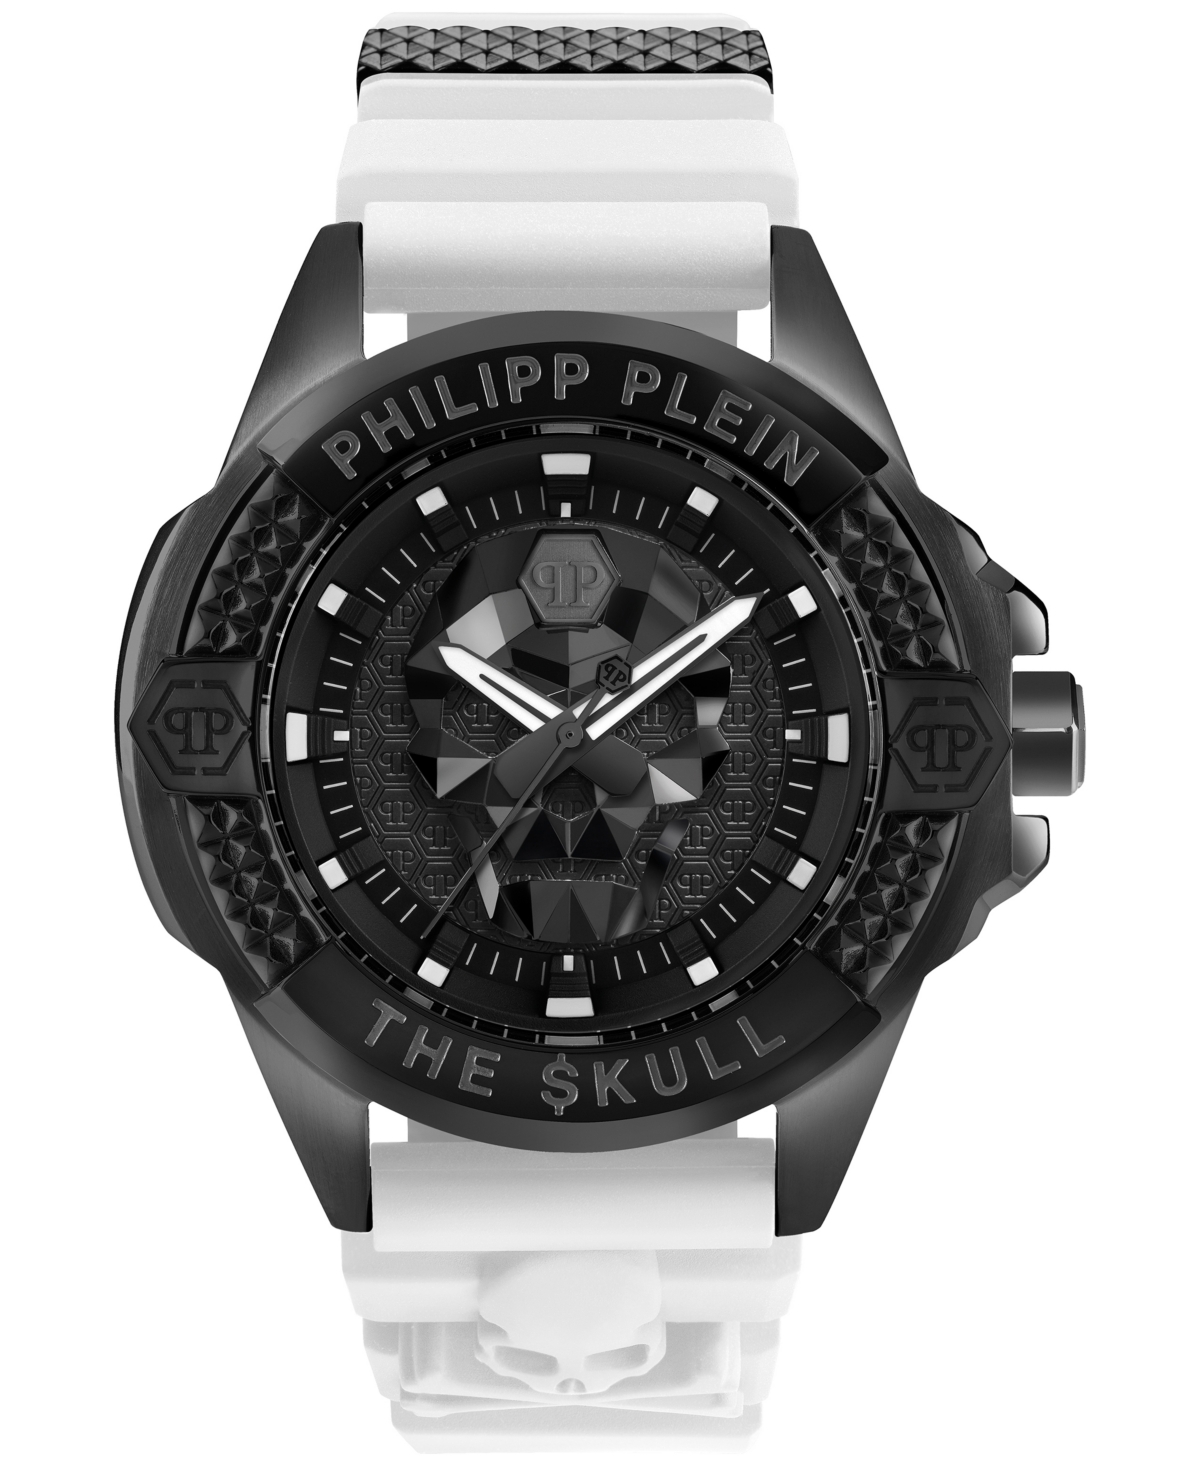 Philipp Plein Men's The Skull White Silicone Strap Watch 44mm In Black